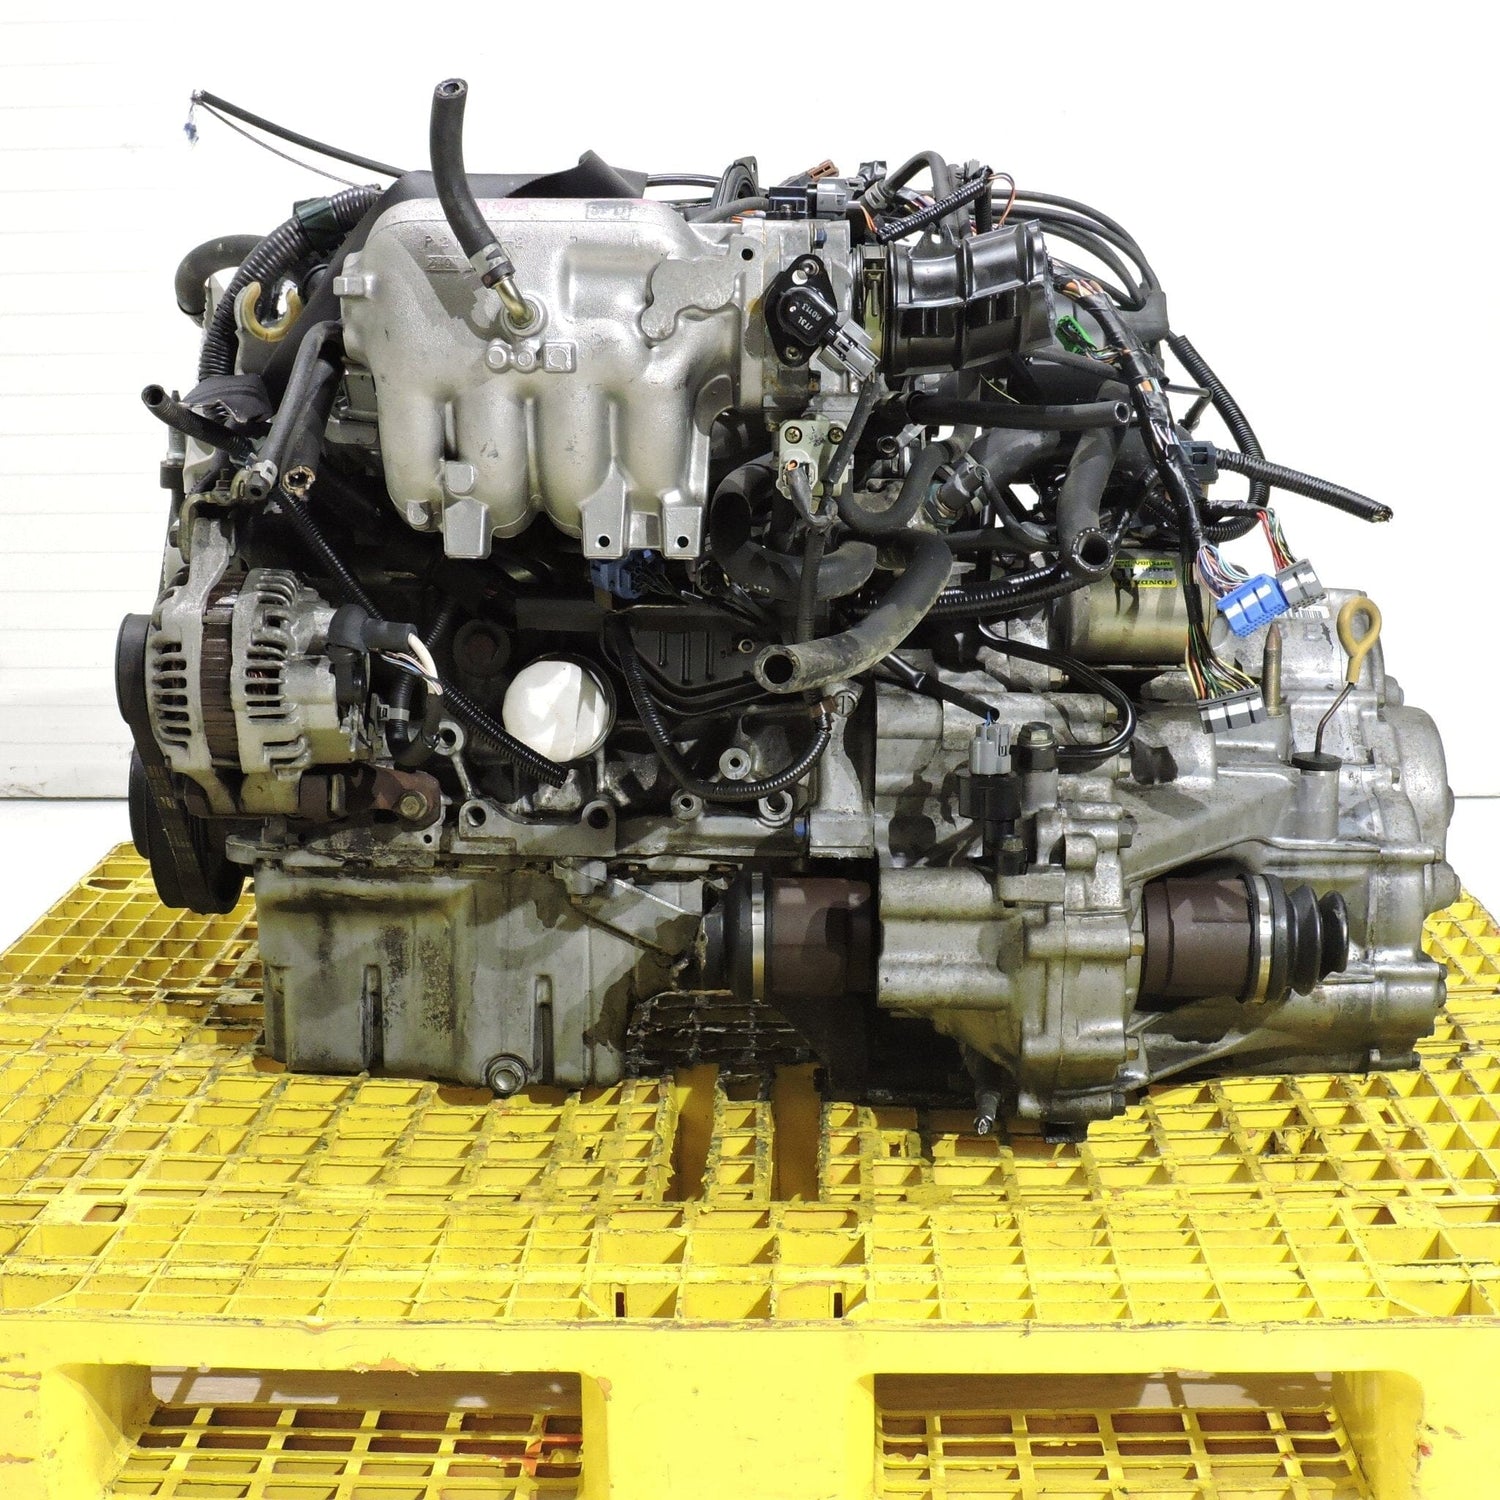 Honda Civic 1992-1995 1.6L 4-Cylinder Sohc Vtec JDM Engine - D16a - Replaces D16y8 (Engine Only)